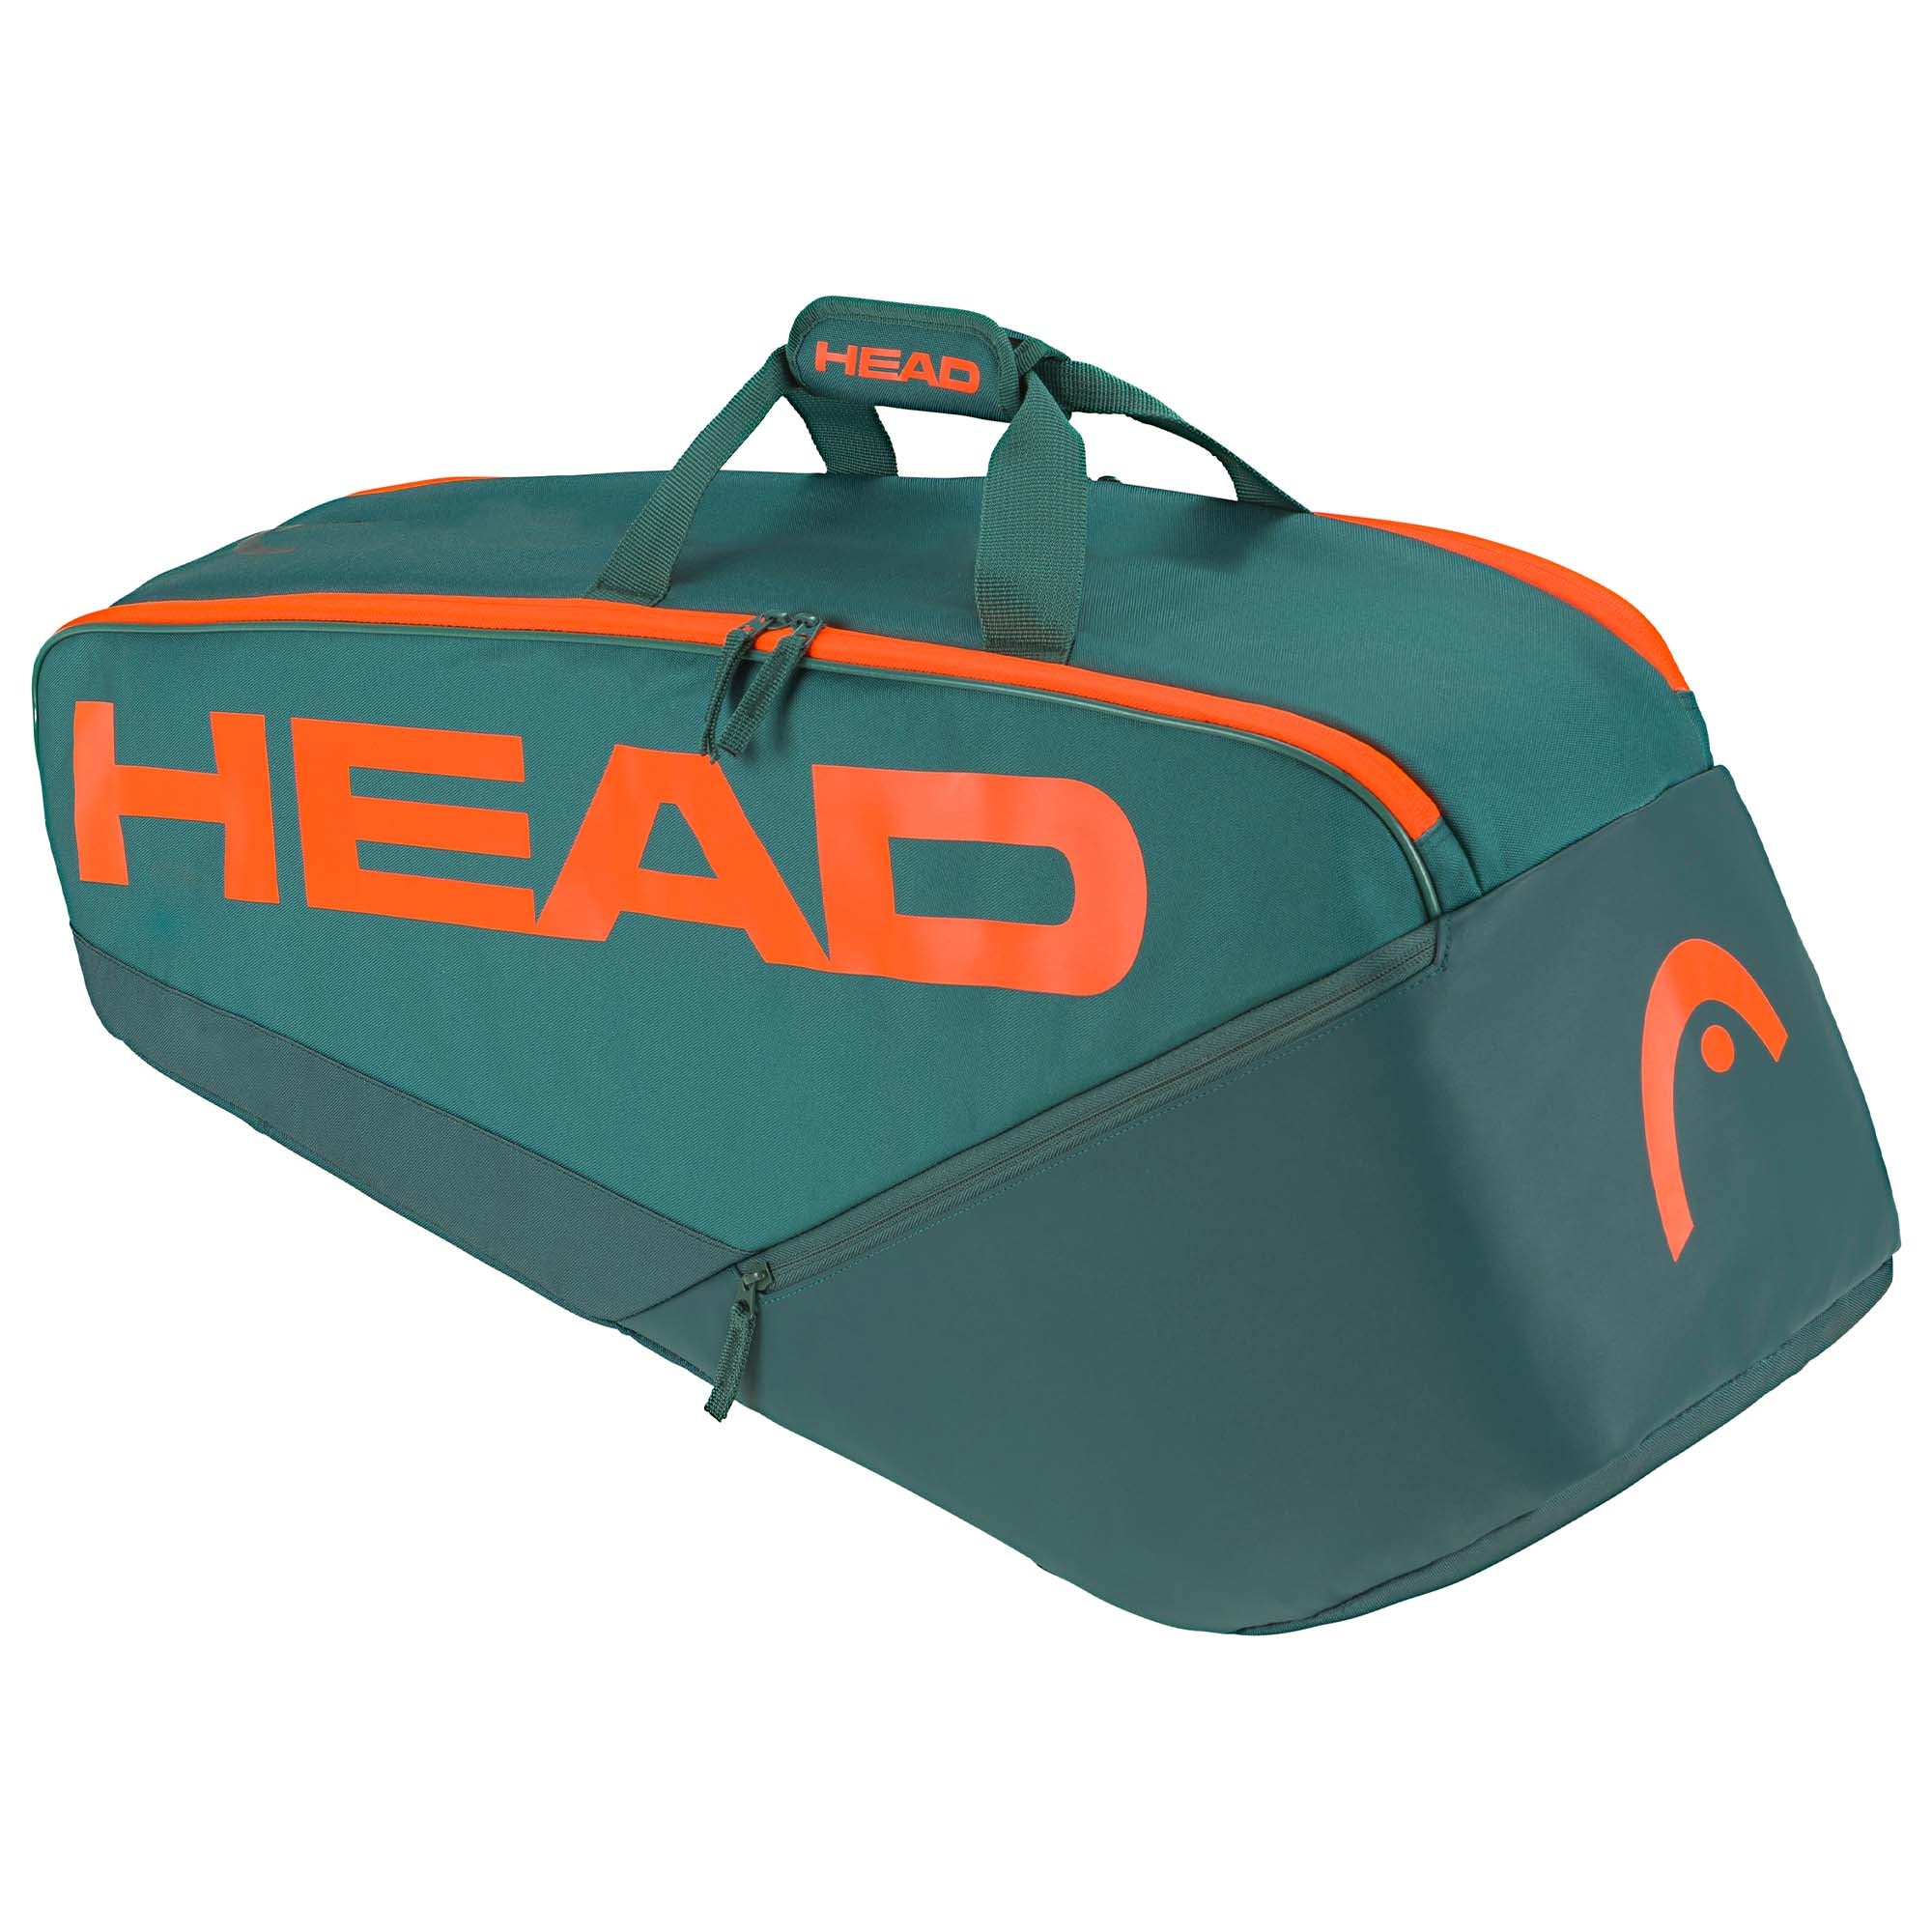 Head Pro 6 Racket Bag